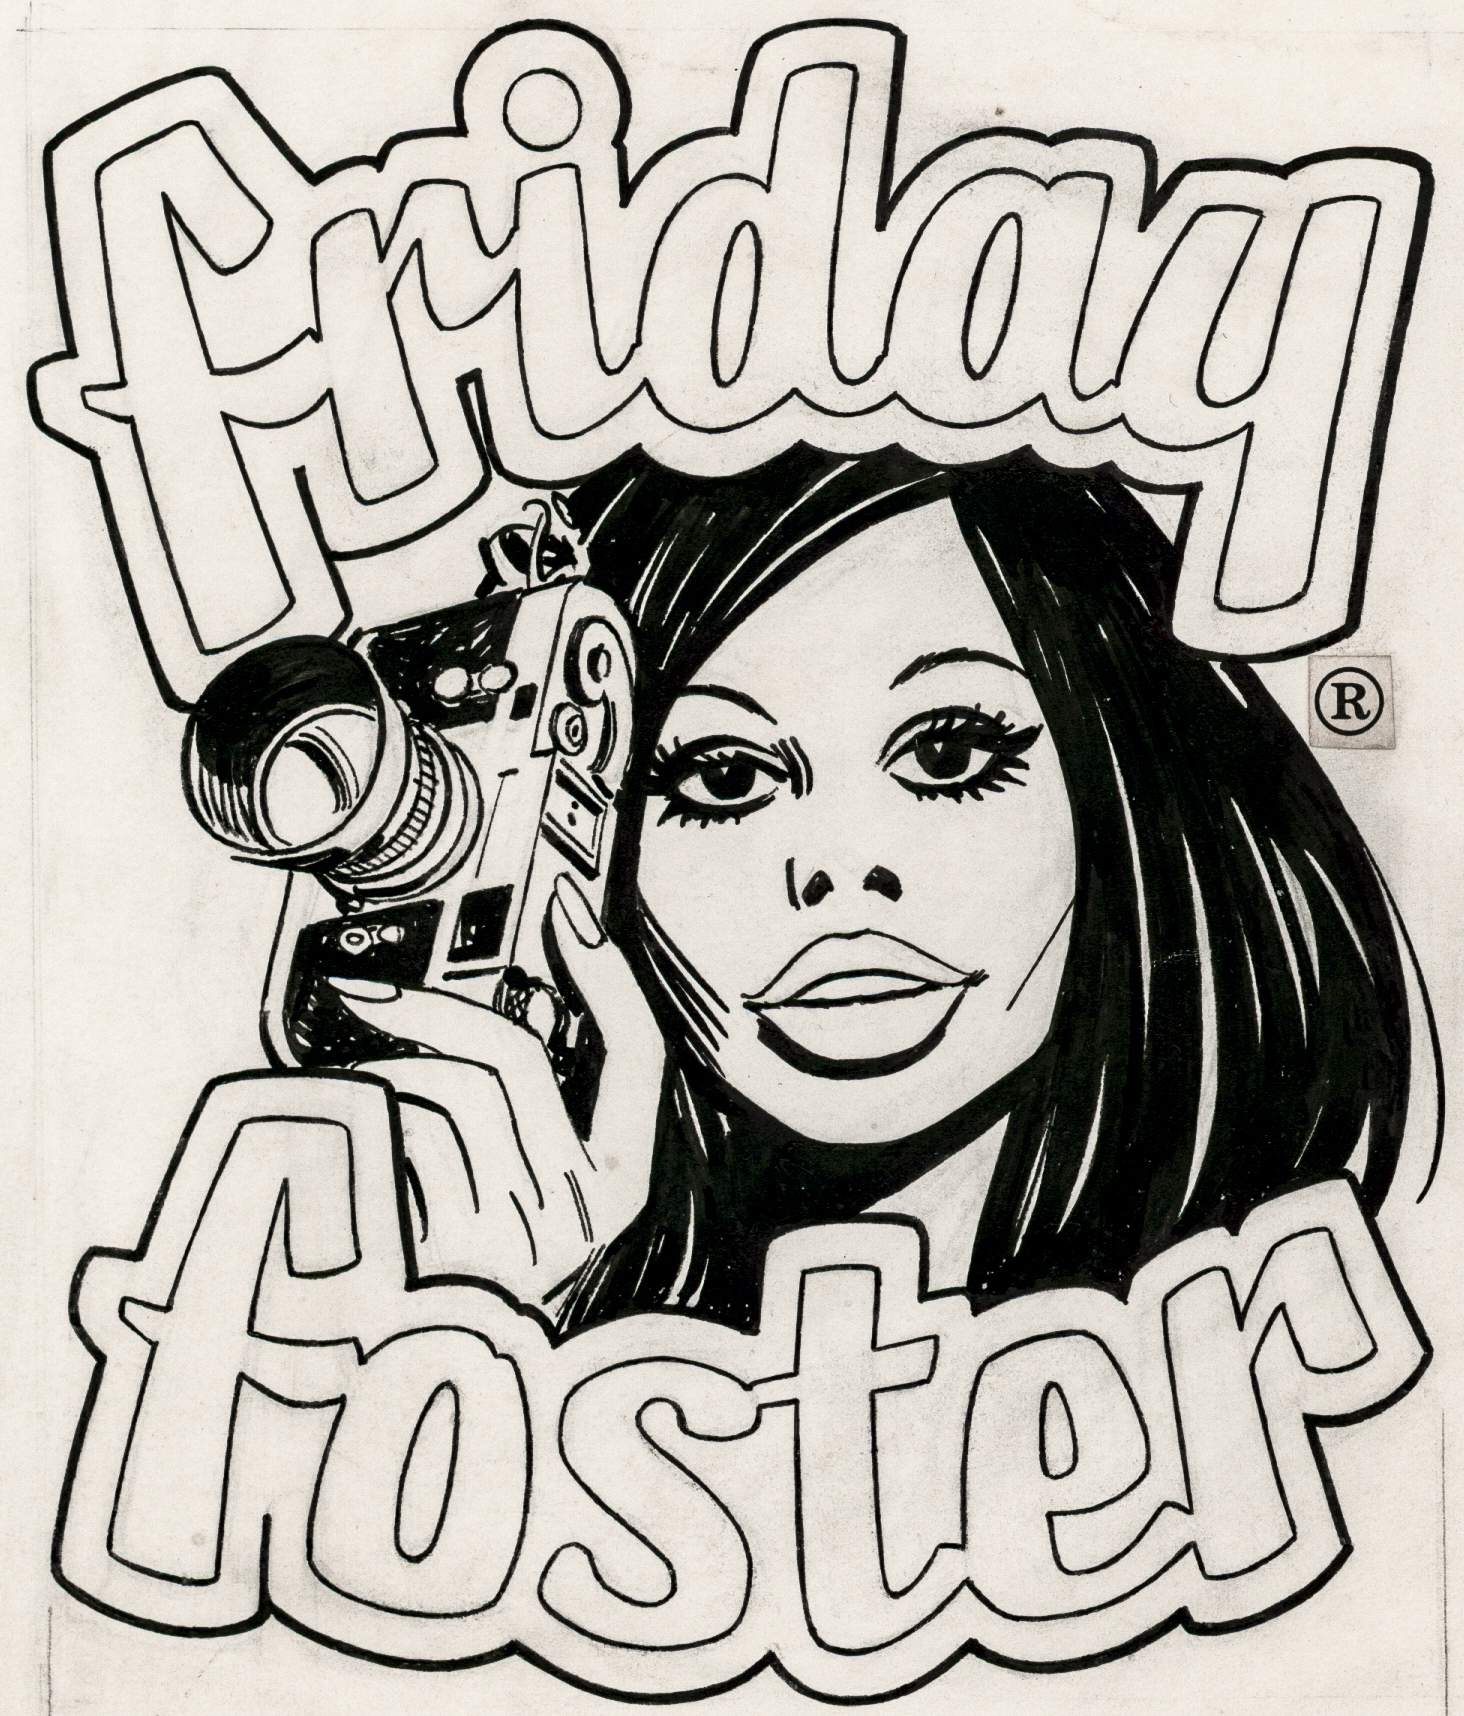 Friday Foster, la heroína del Black Power nacida en Barcelona